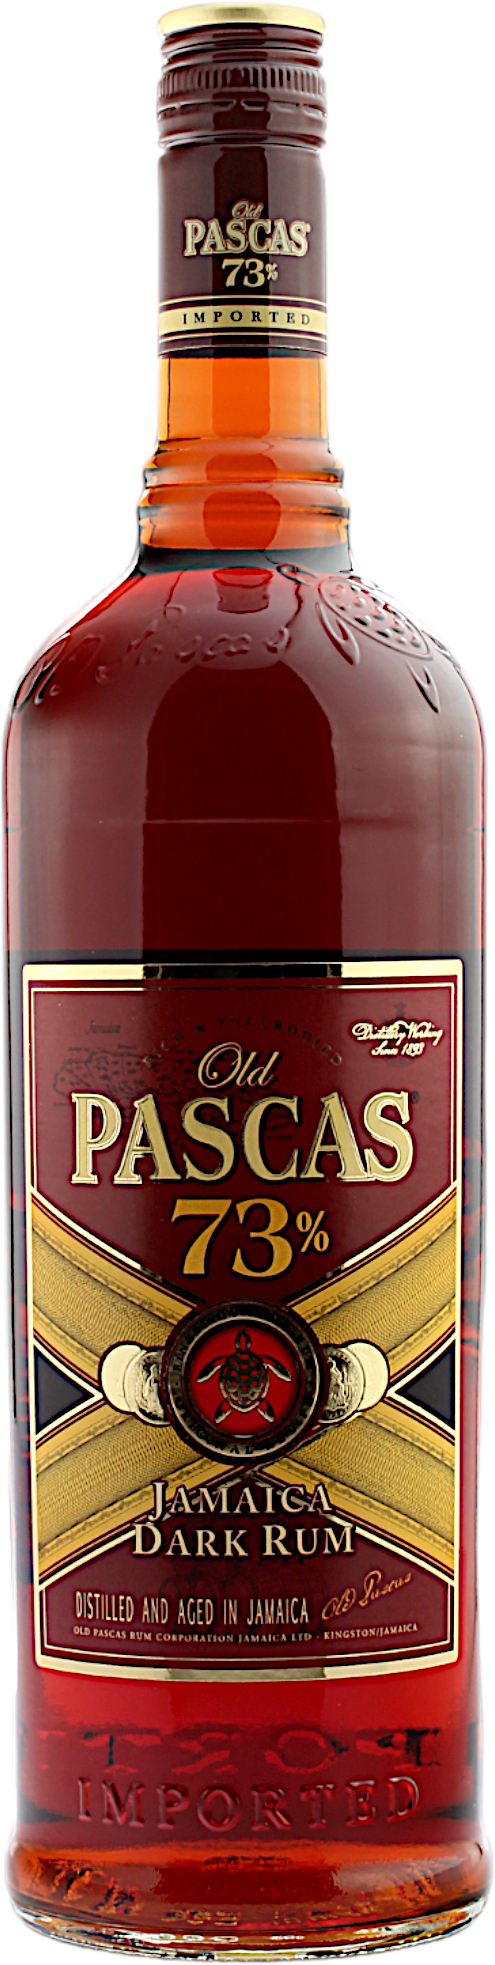 Old Pascas Jamaica Overproofed Rum 73.0% 1 Liter